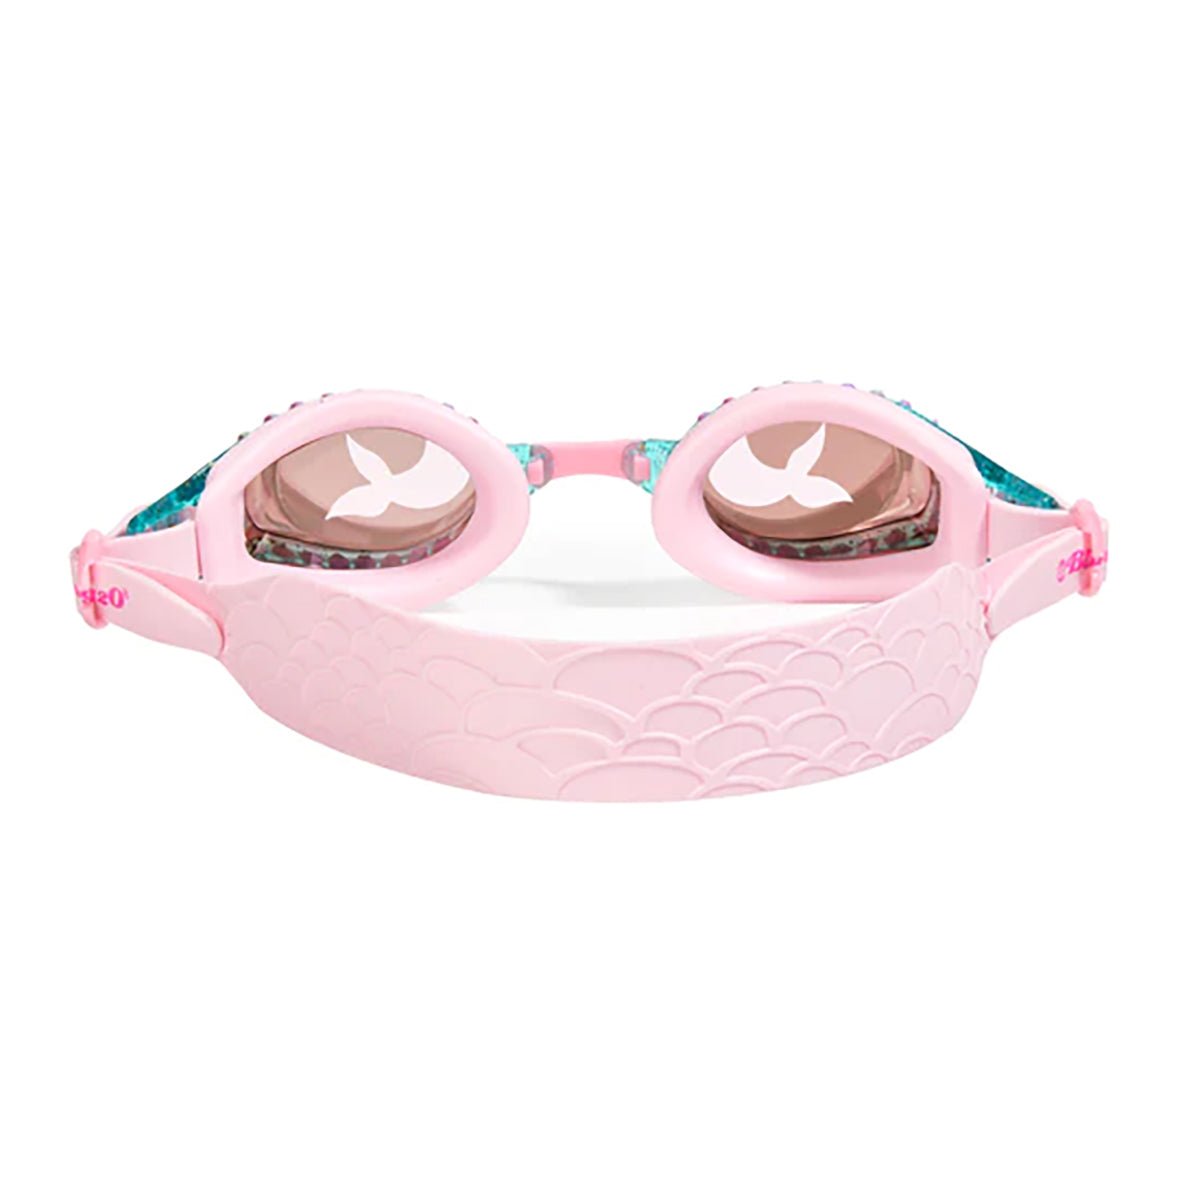 Swim Goggles Mermaid Jewel Pink | Bling2O